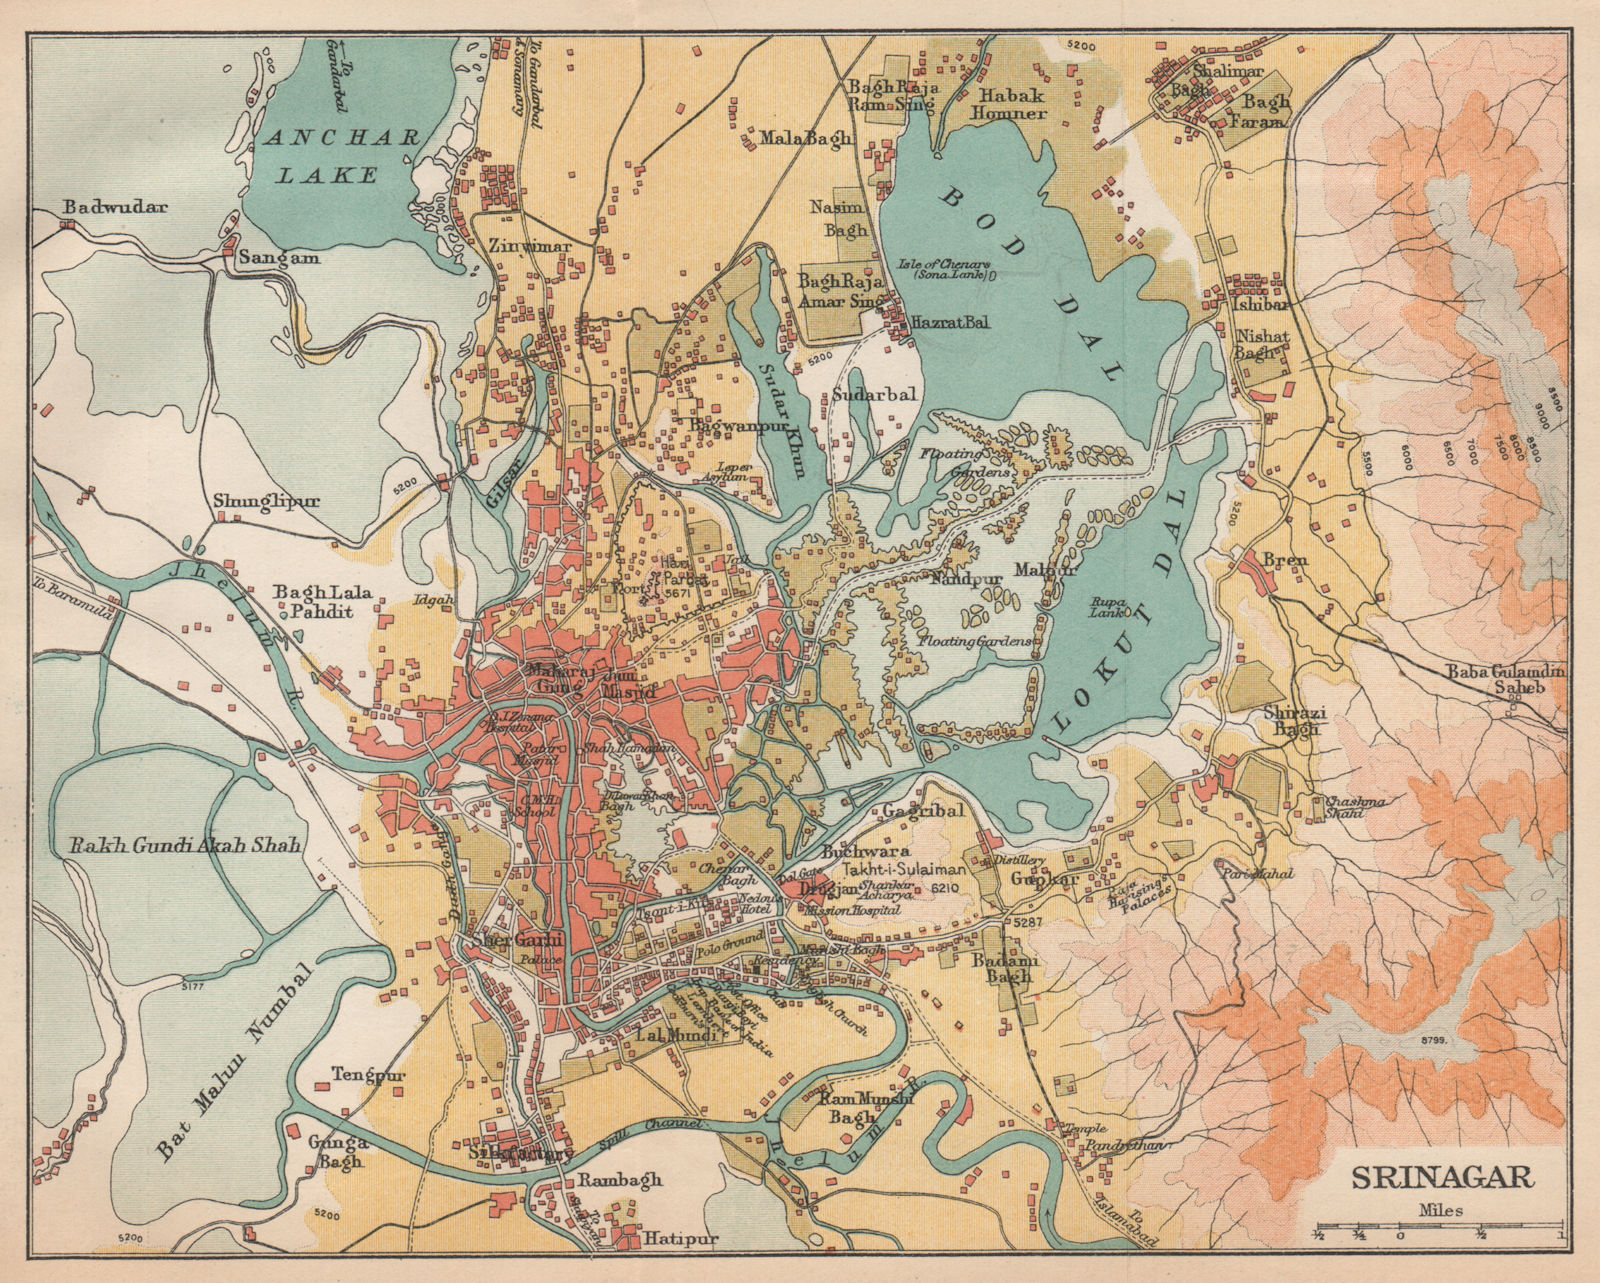 Associate Product INDIA. Srinagar city & environs plan. Kashmir 1929 old vintage map chart